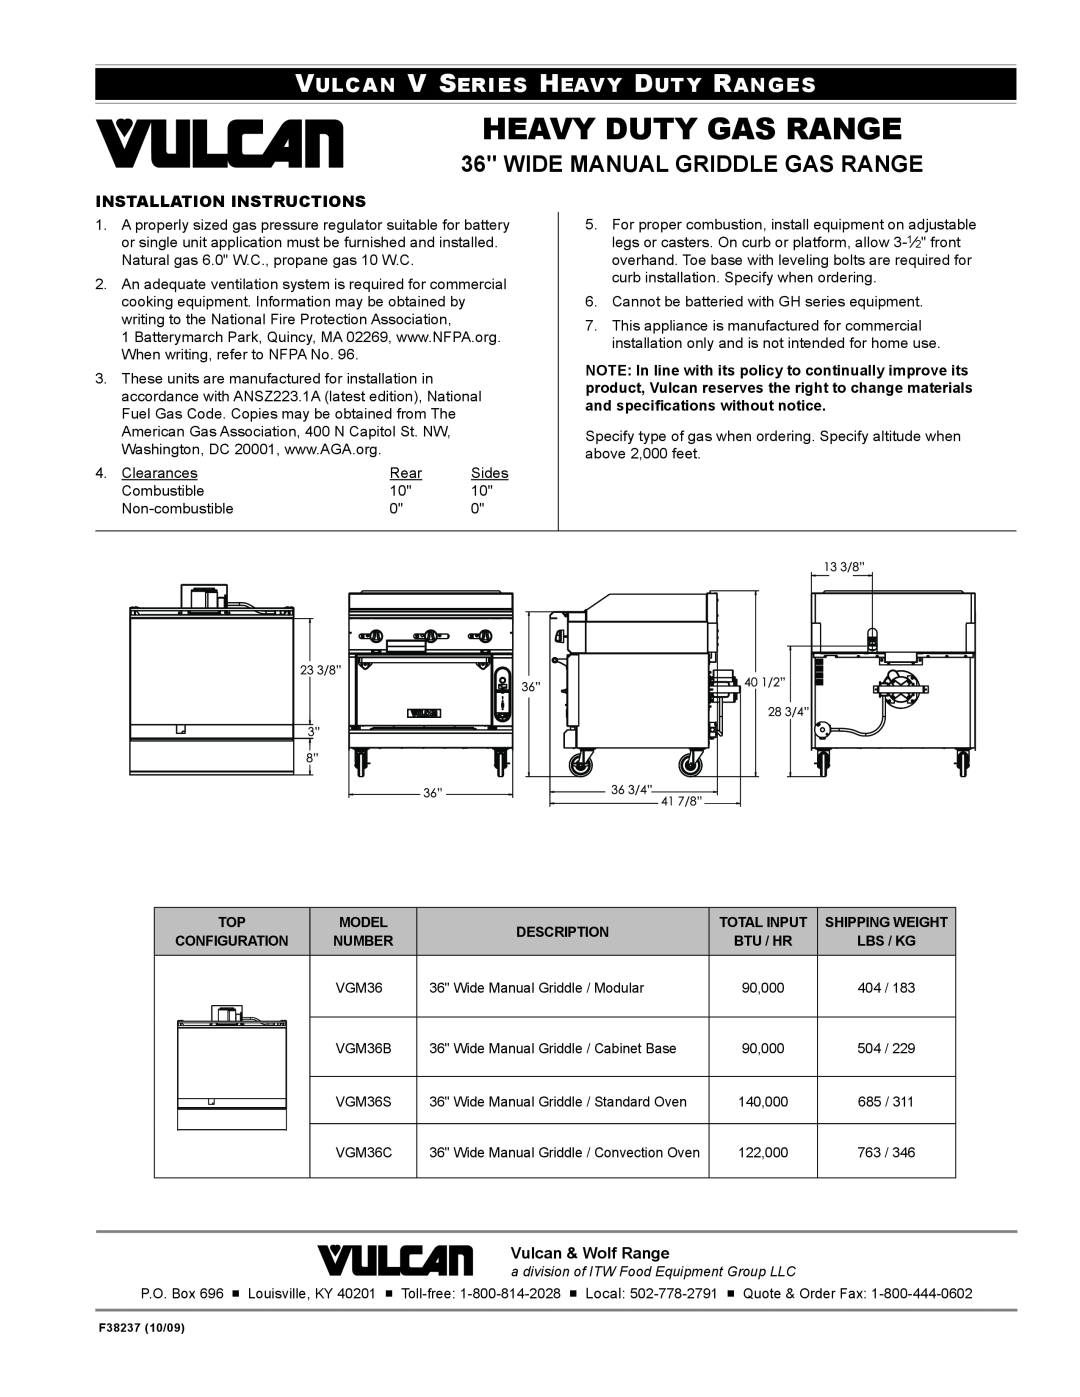 Wolf VGM36C Installation Instructions, Heavy Duty Gas Range, Wide Manual Griddle Gas Range, Vulcan & Wolf Range, Model 